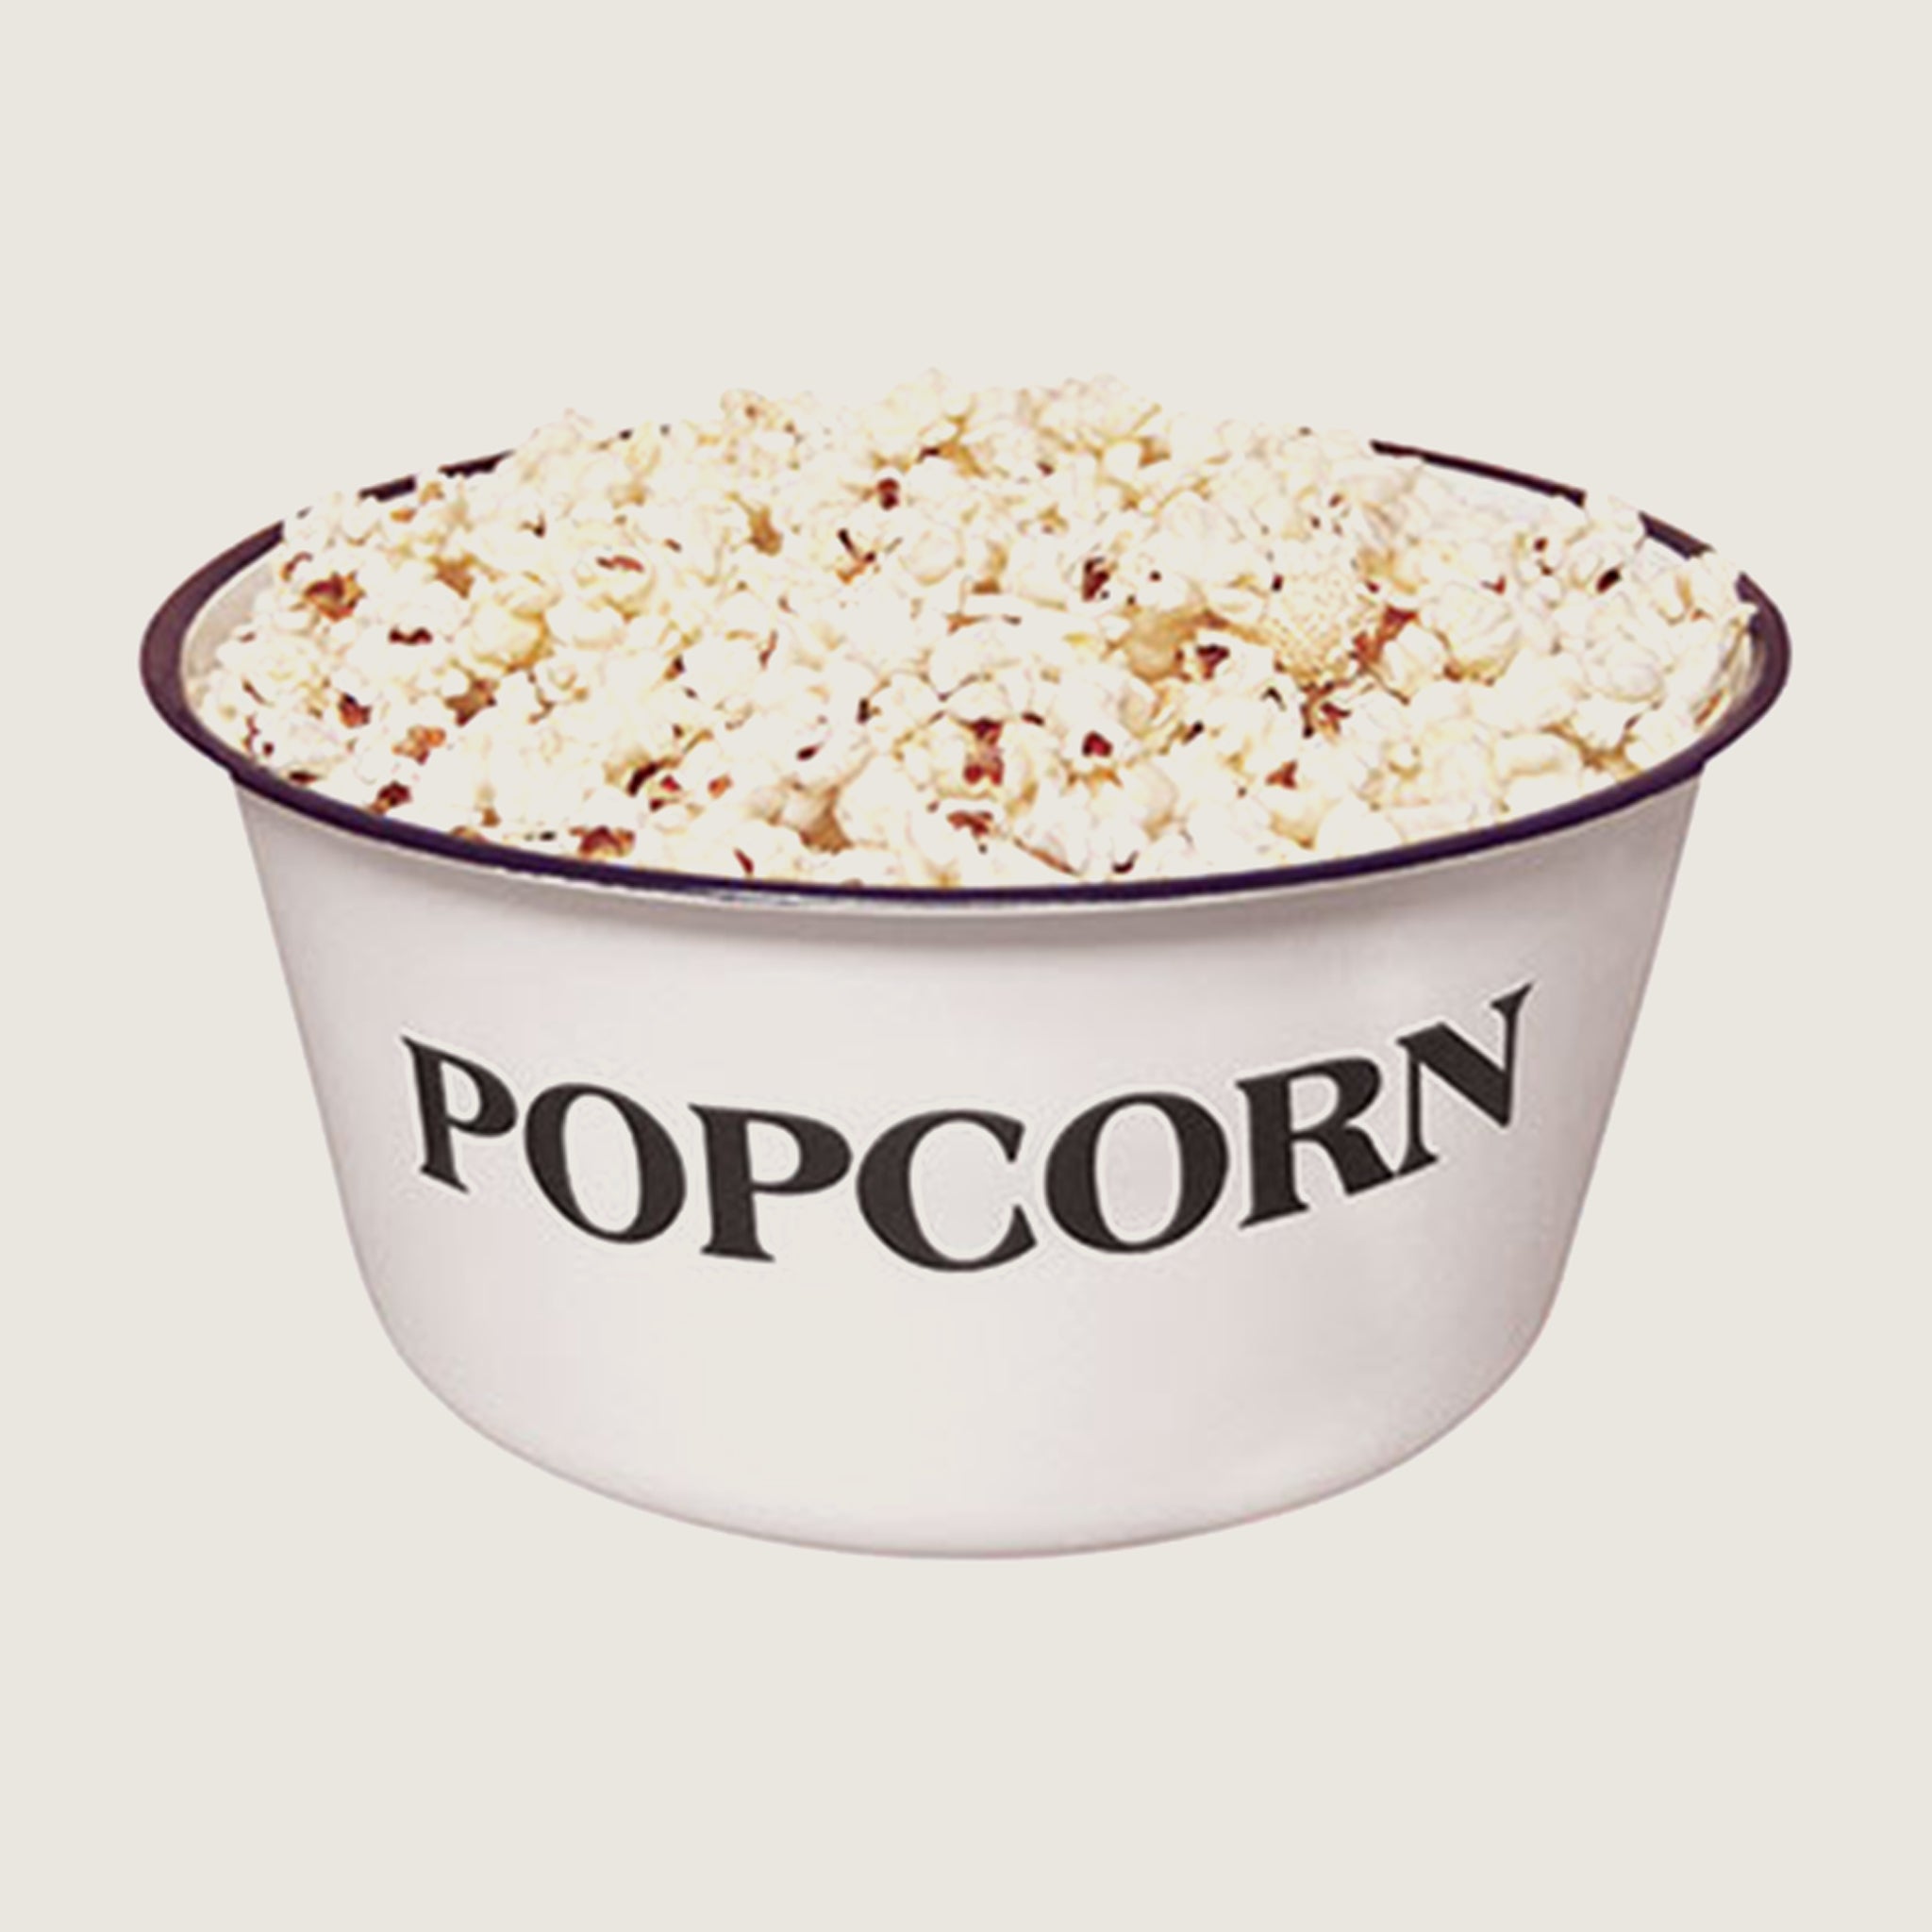 Popcorn Enamelware Bowl - Blackbird General Store